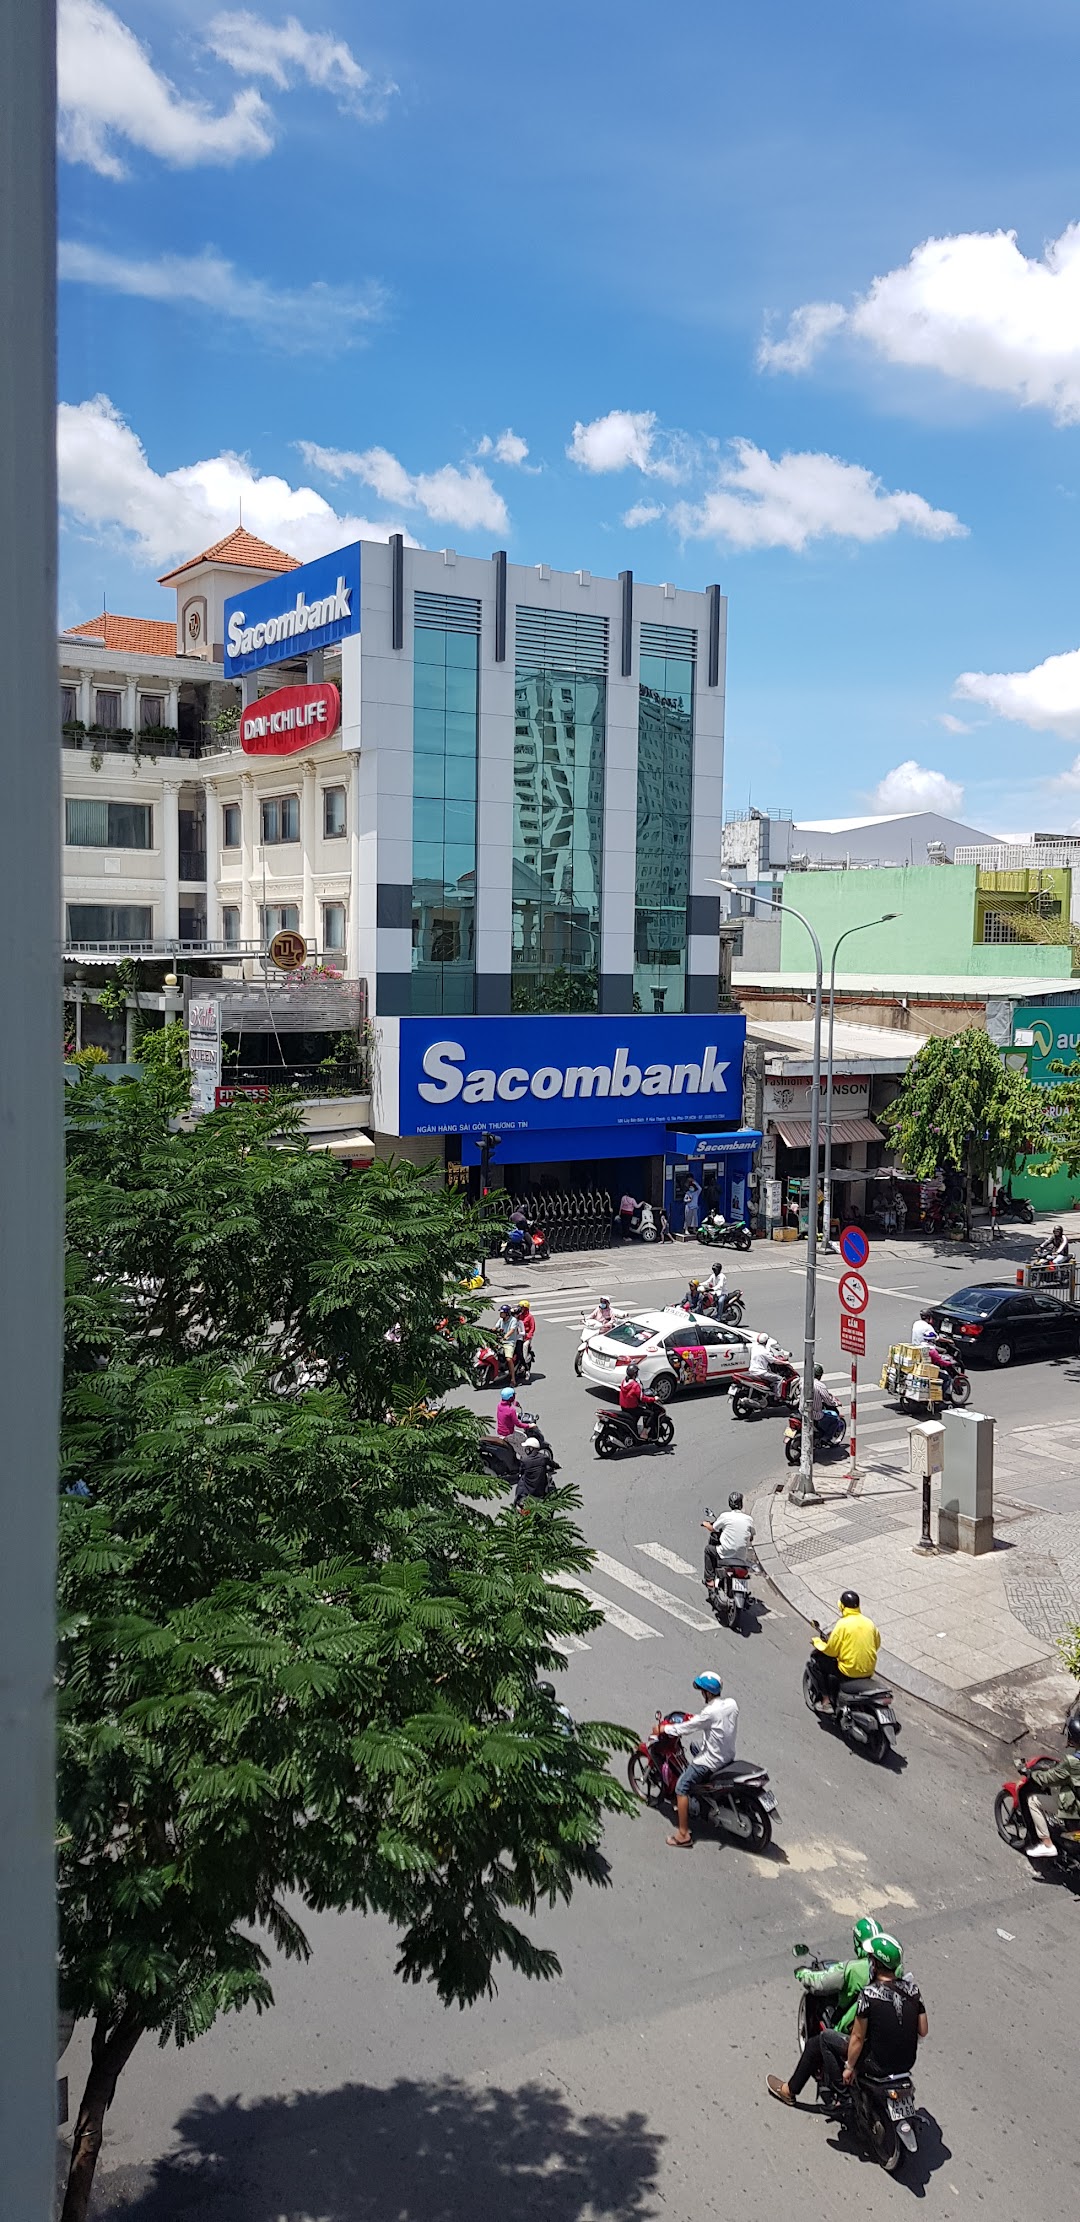 Sacombank-CN Tân Phú-PGD Lũy Bán Bích